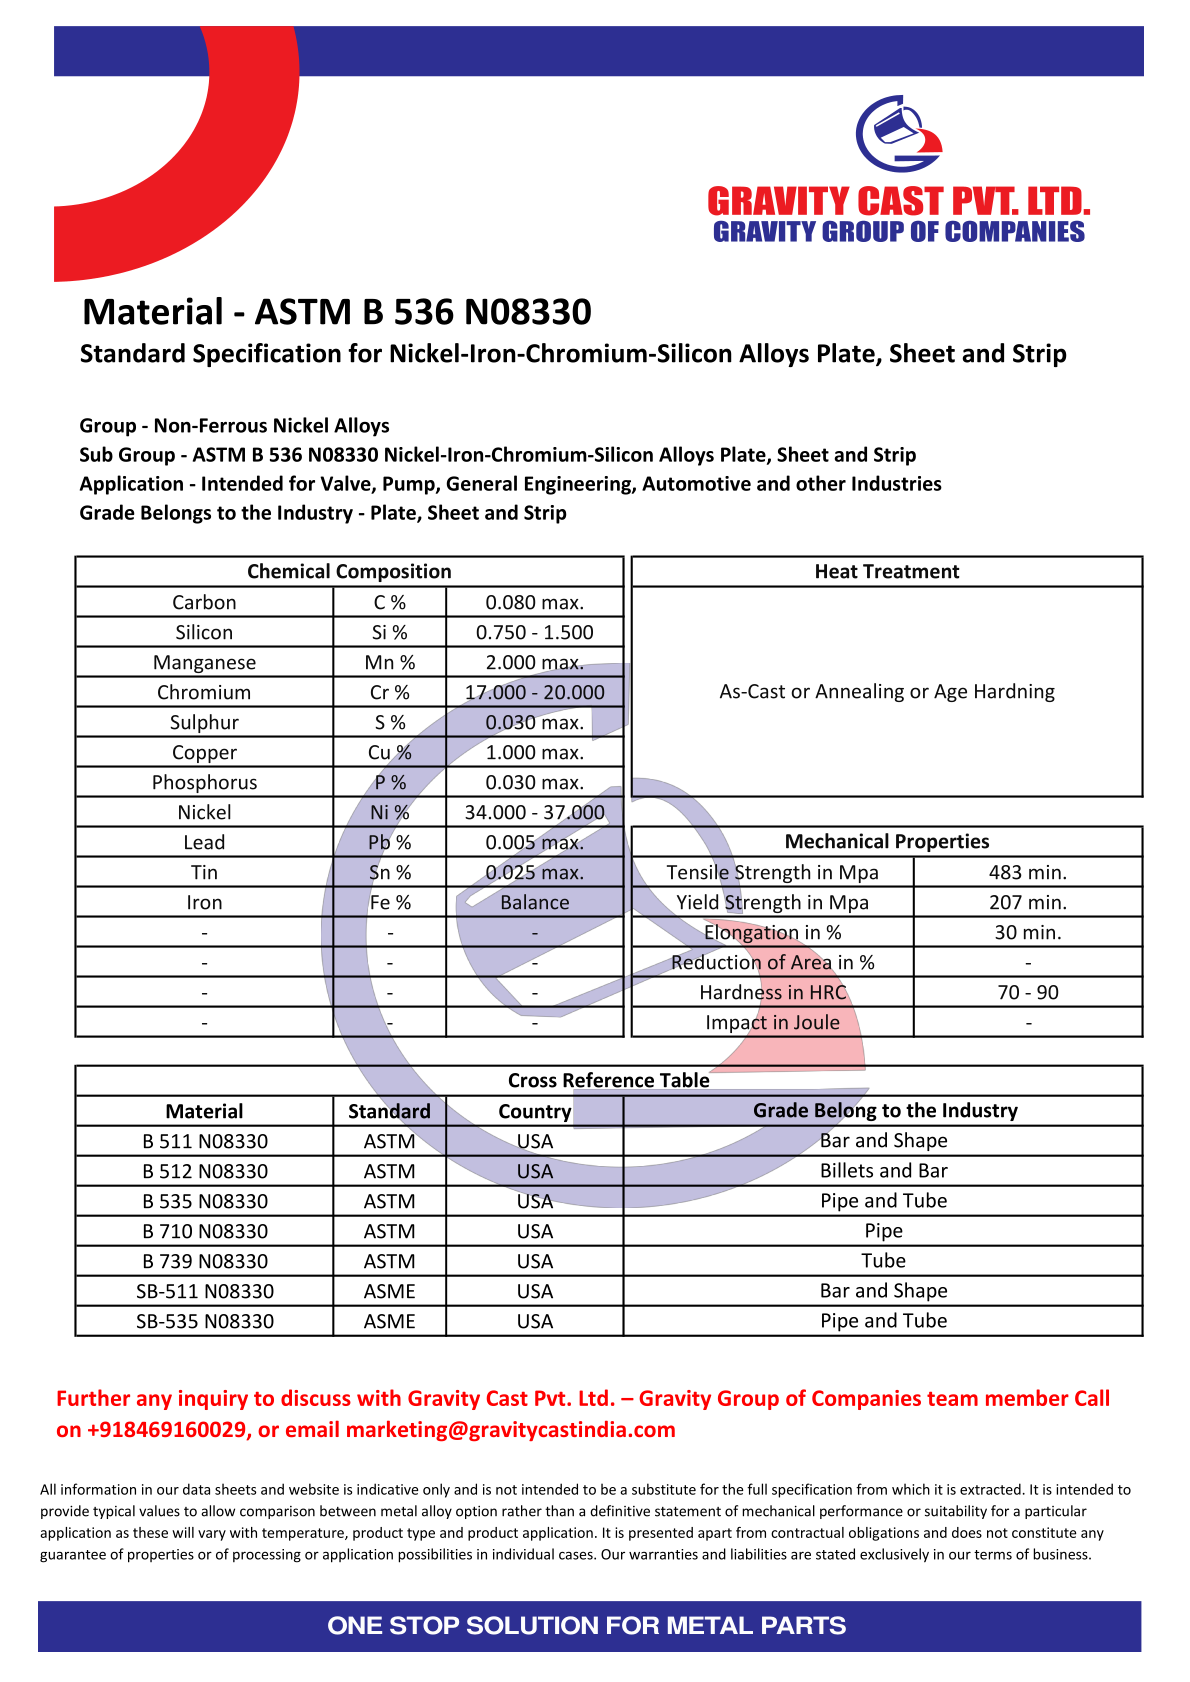 ASTM B 536 N08330.pdf